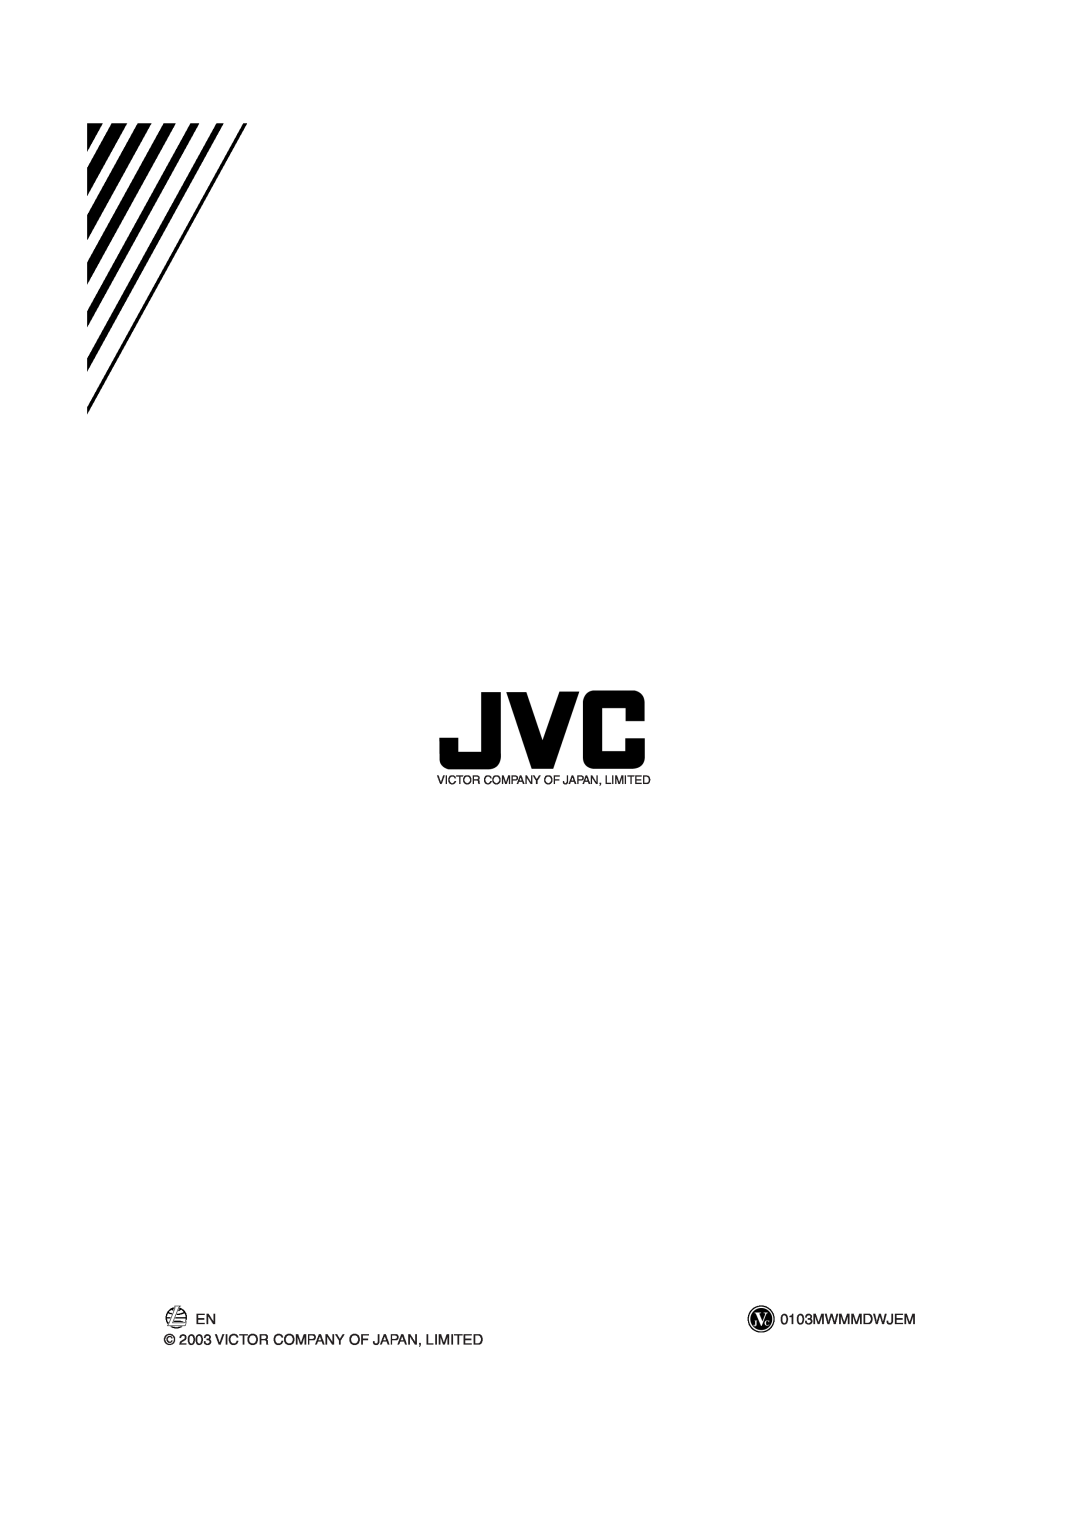 JVC SP-UXH33, CA-UXH33, UX-H30 manual 0103MWMMDWJEM, Victor Company Of Japan, Limited 